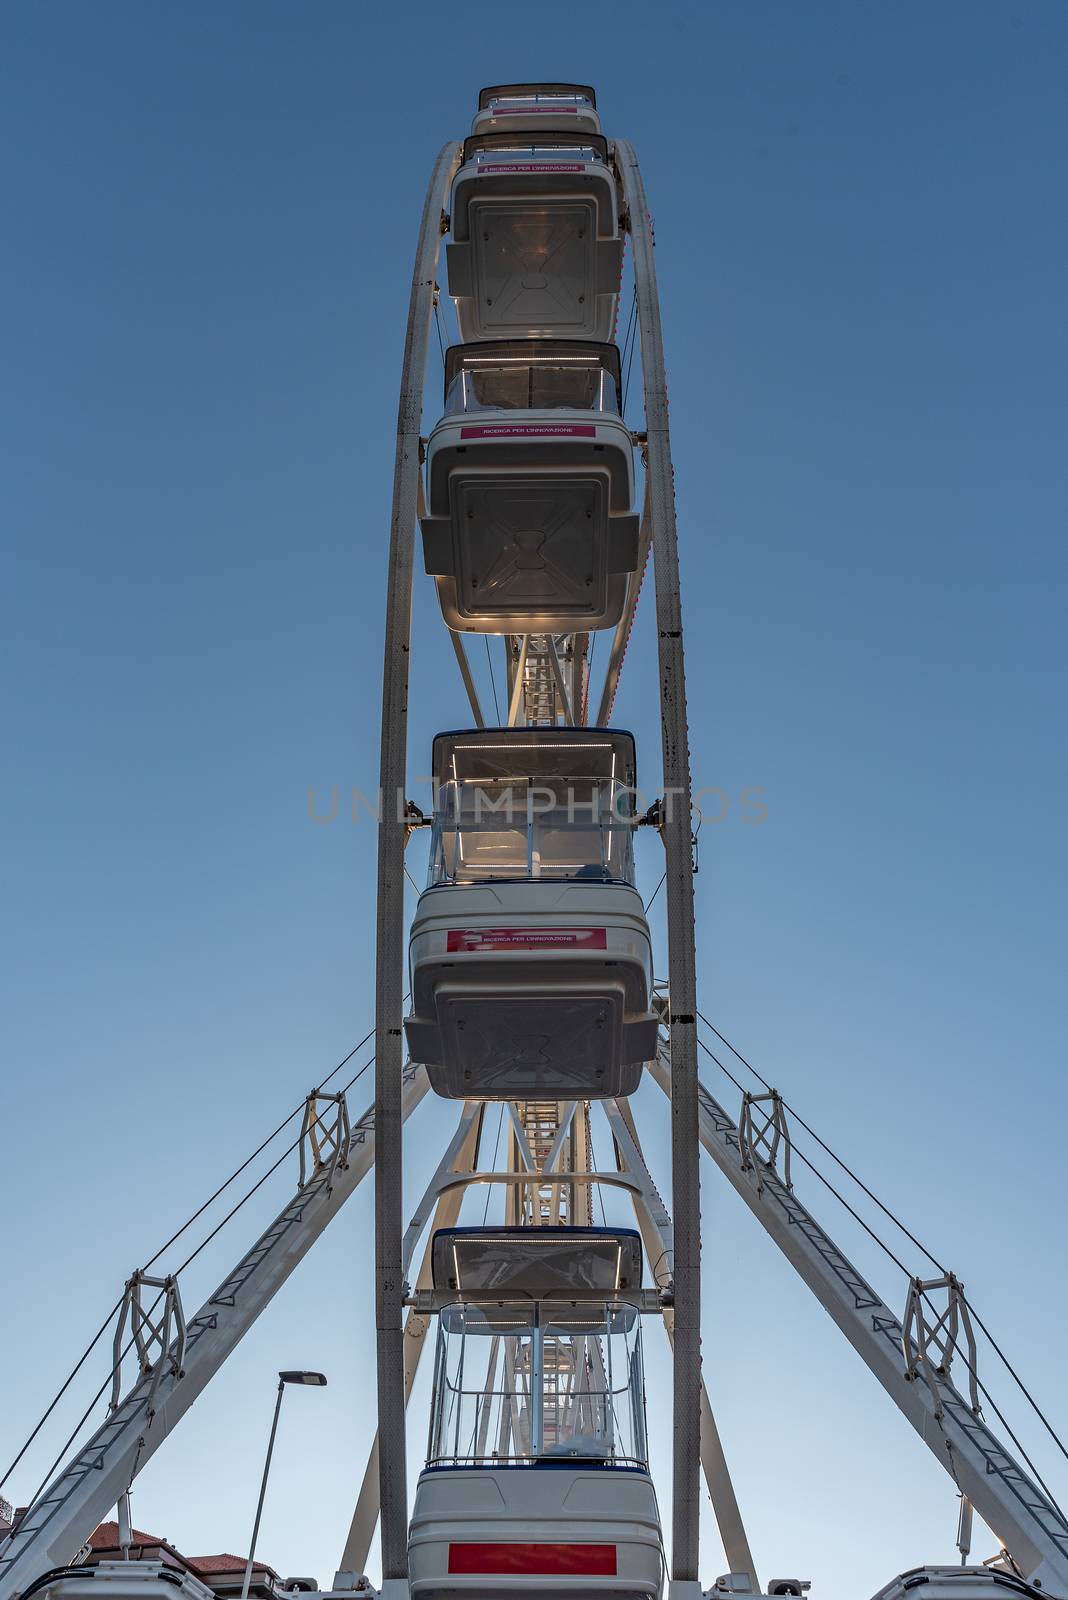 Side view of a Ferris wheel under a blue sky